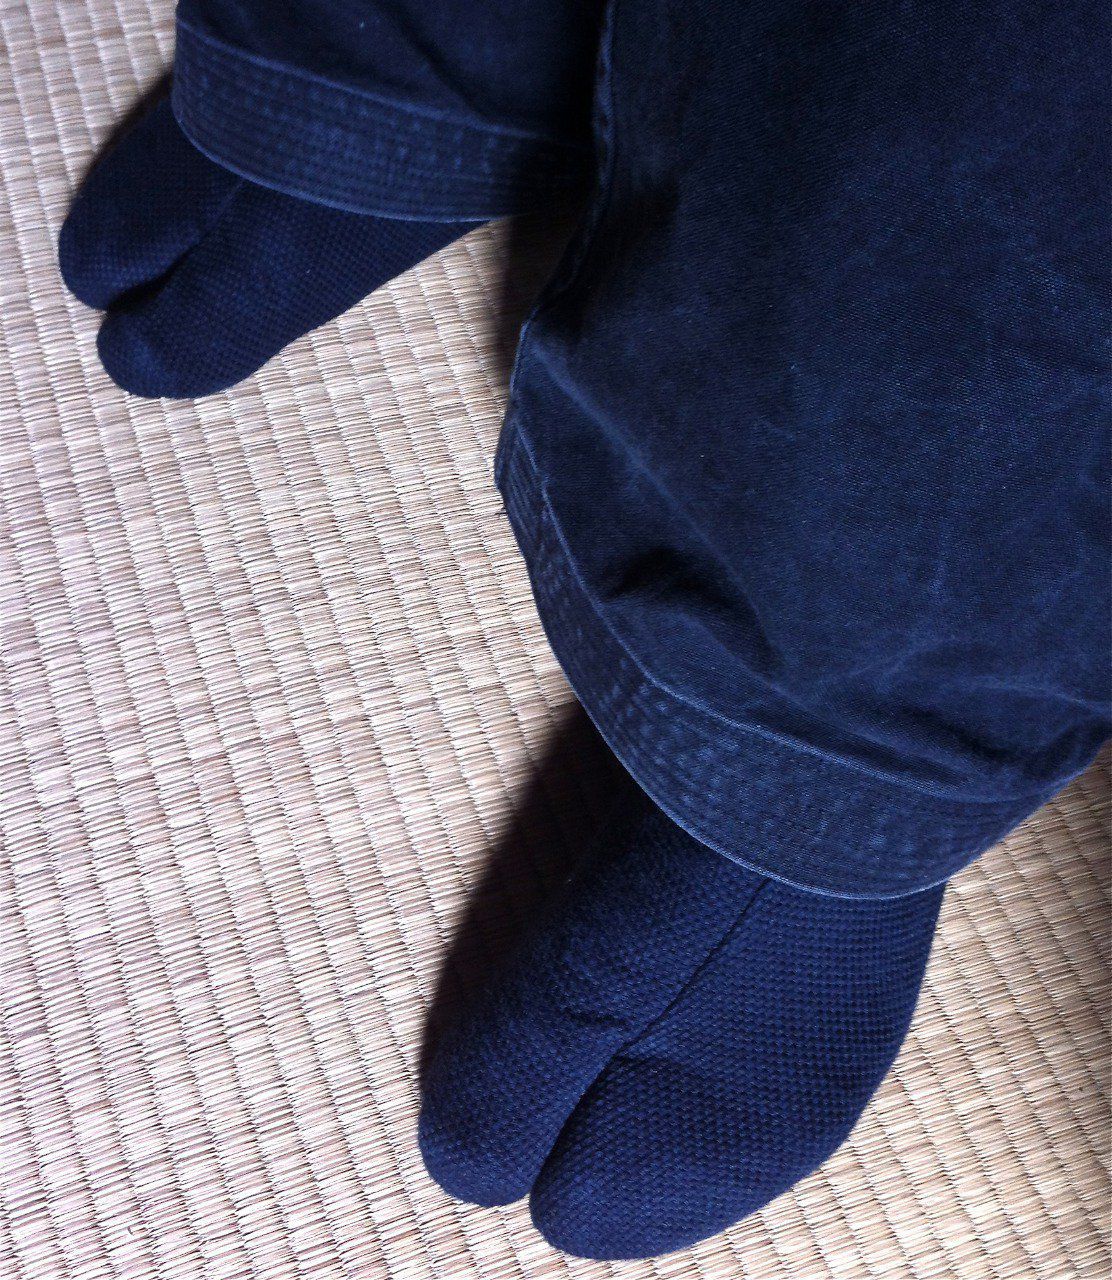 Luxe Tabi Ninja Sashiko noir coton 4 Kohaze 23cm "Made in Japan"  